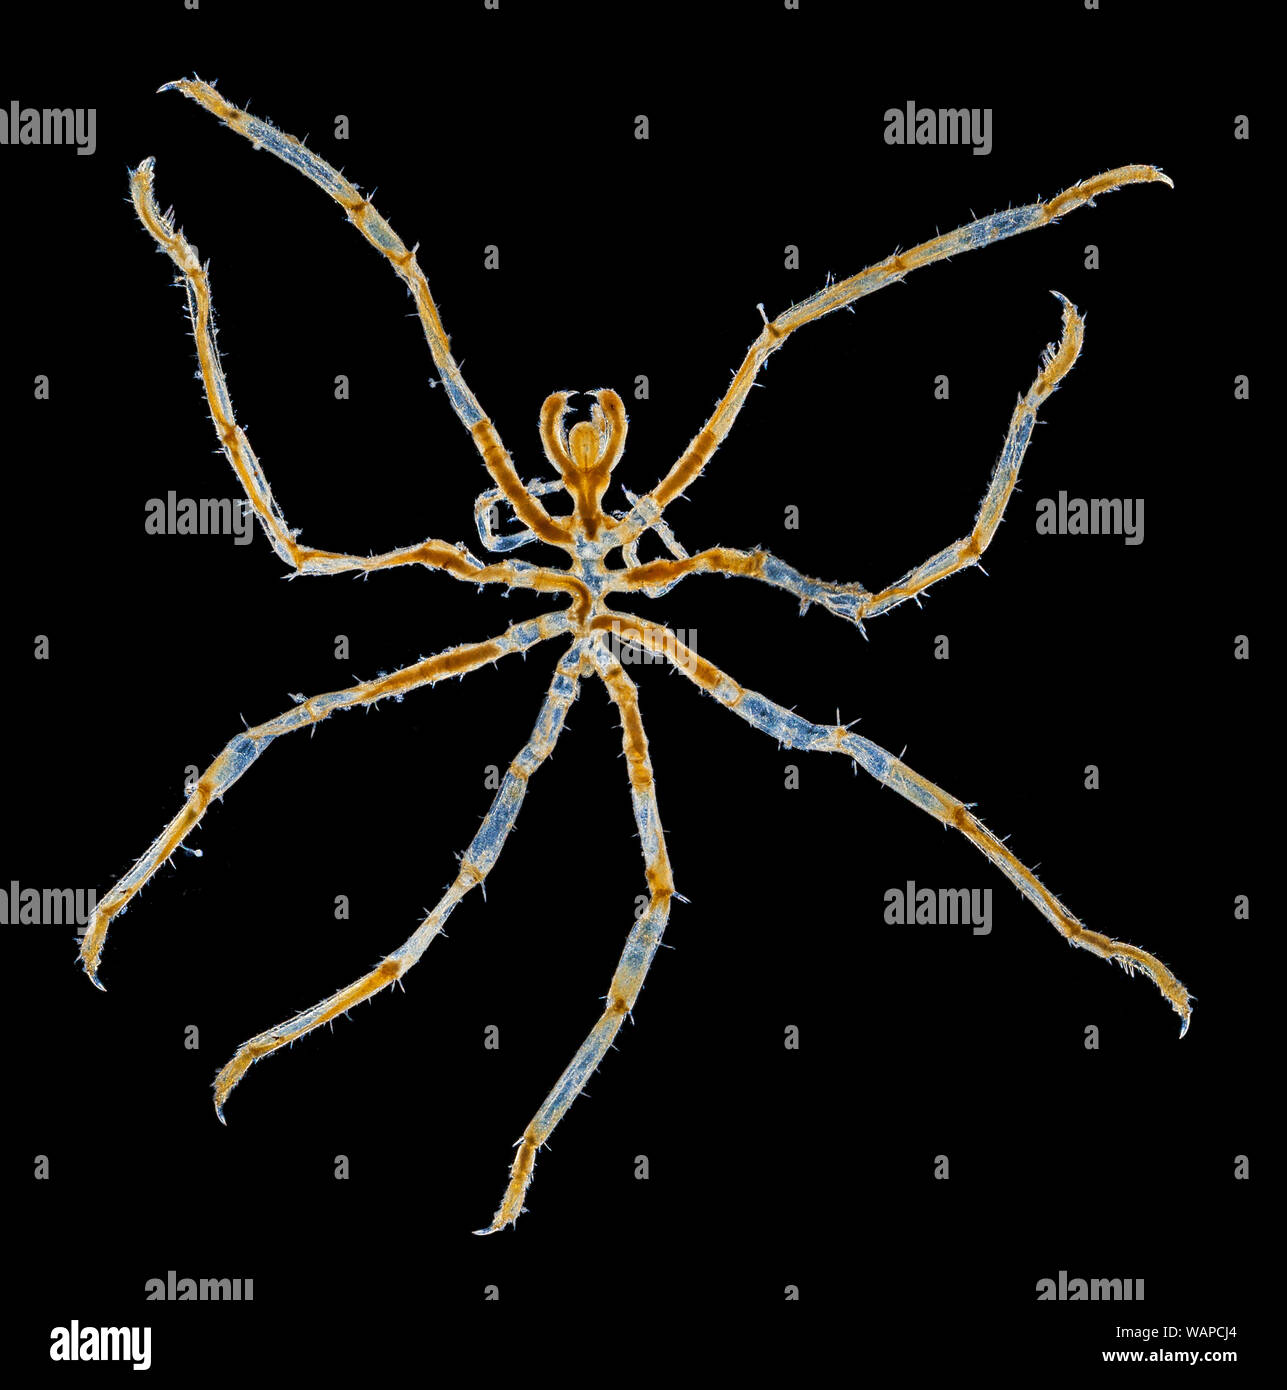 Sea Spider, Nymphon sp. male, darkfield illumination Stock Photo